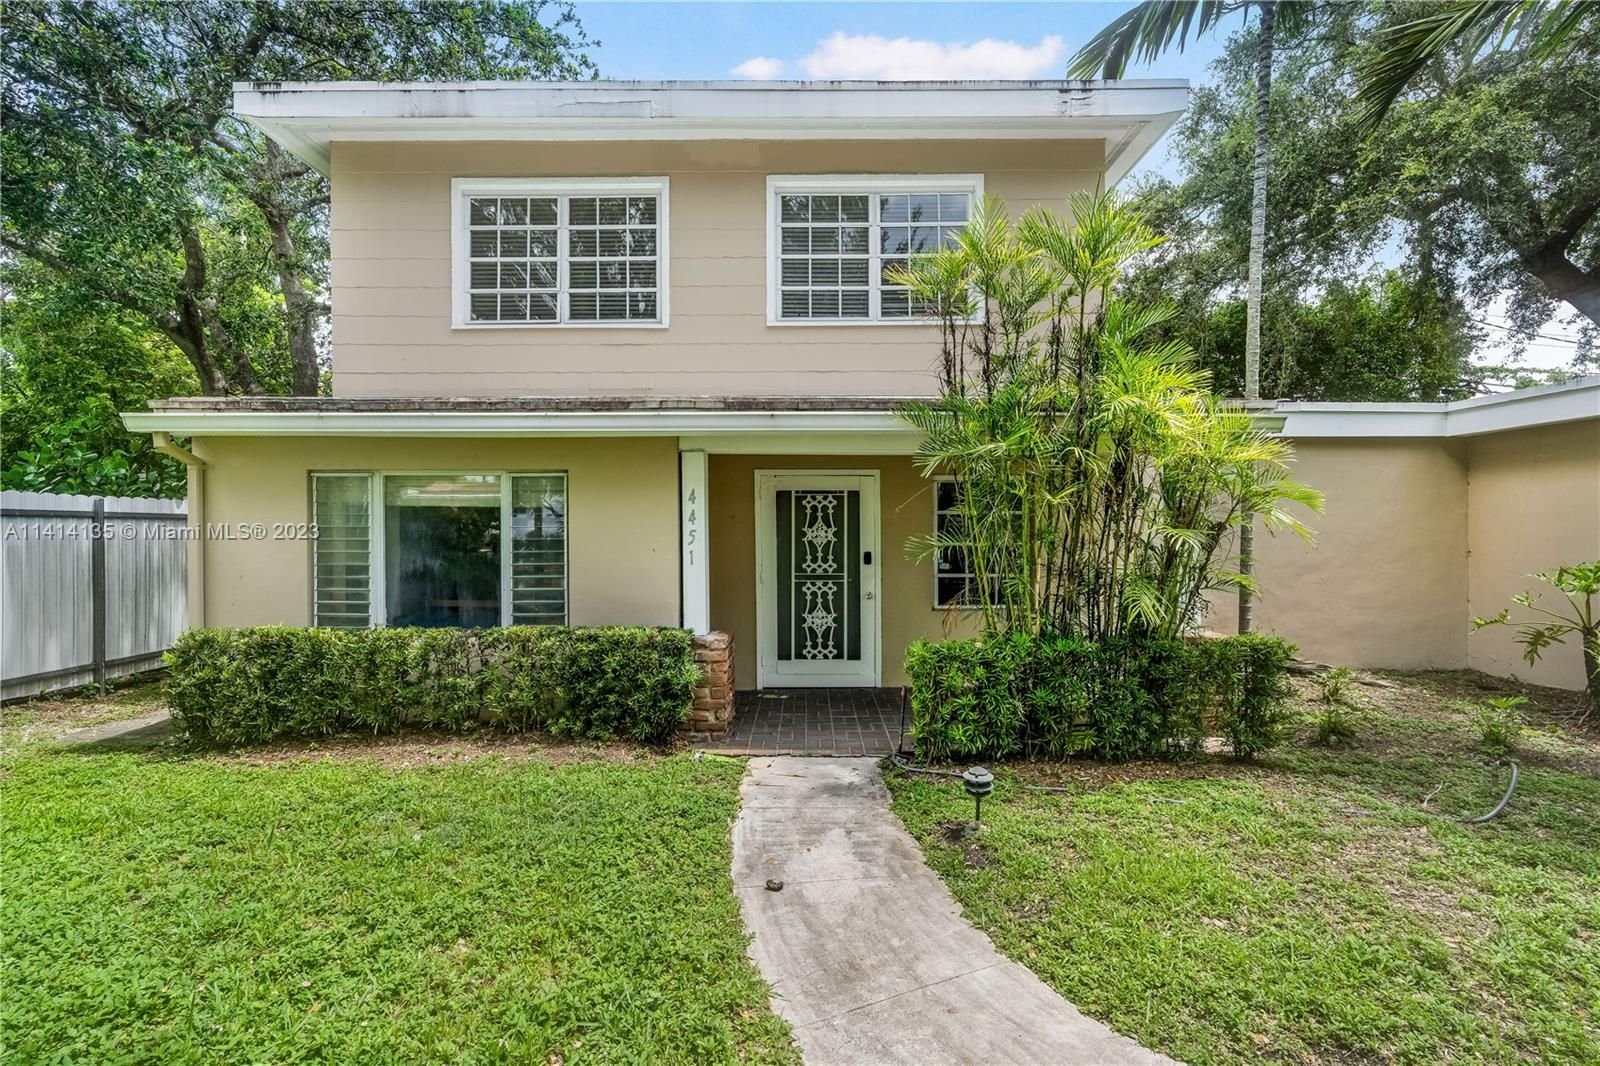 Real estate property located at 4451 14th St, Miami-Dade County, Miami, FL